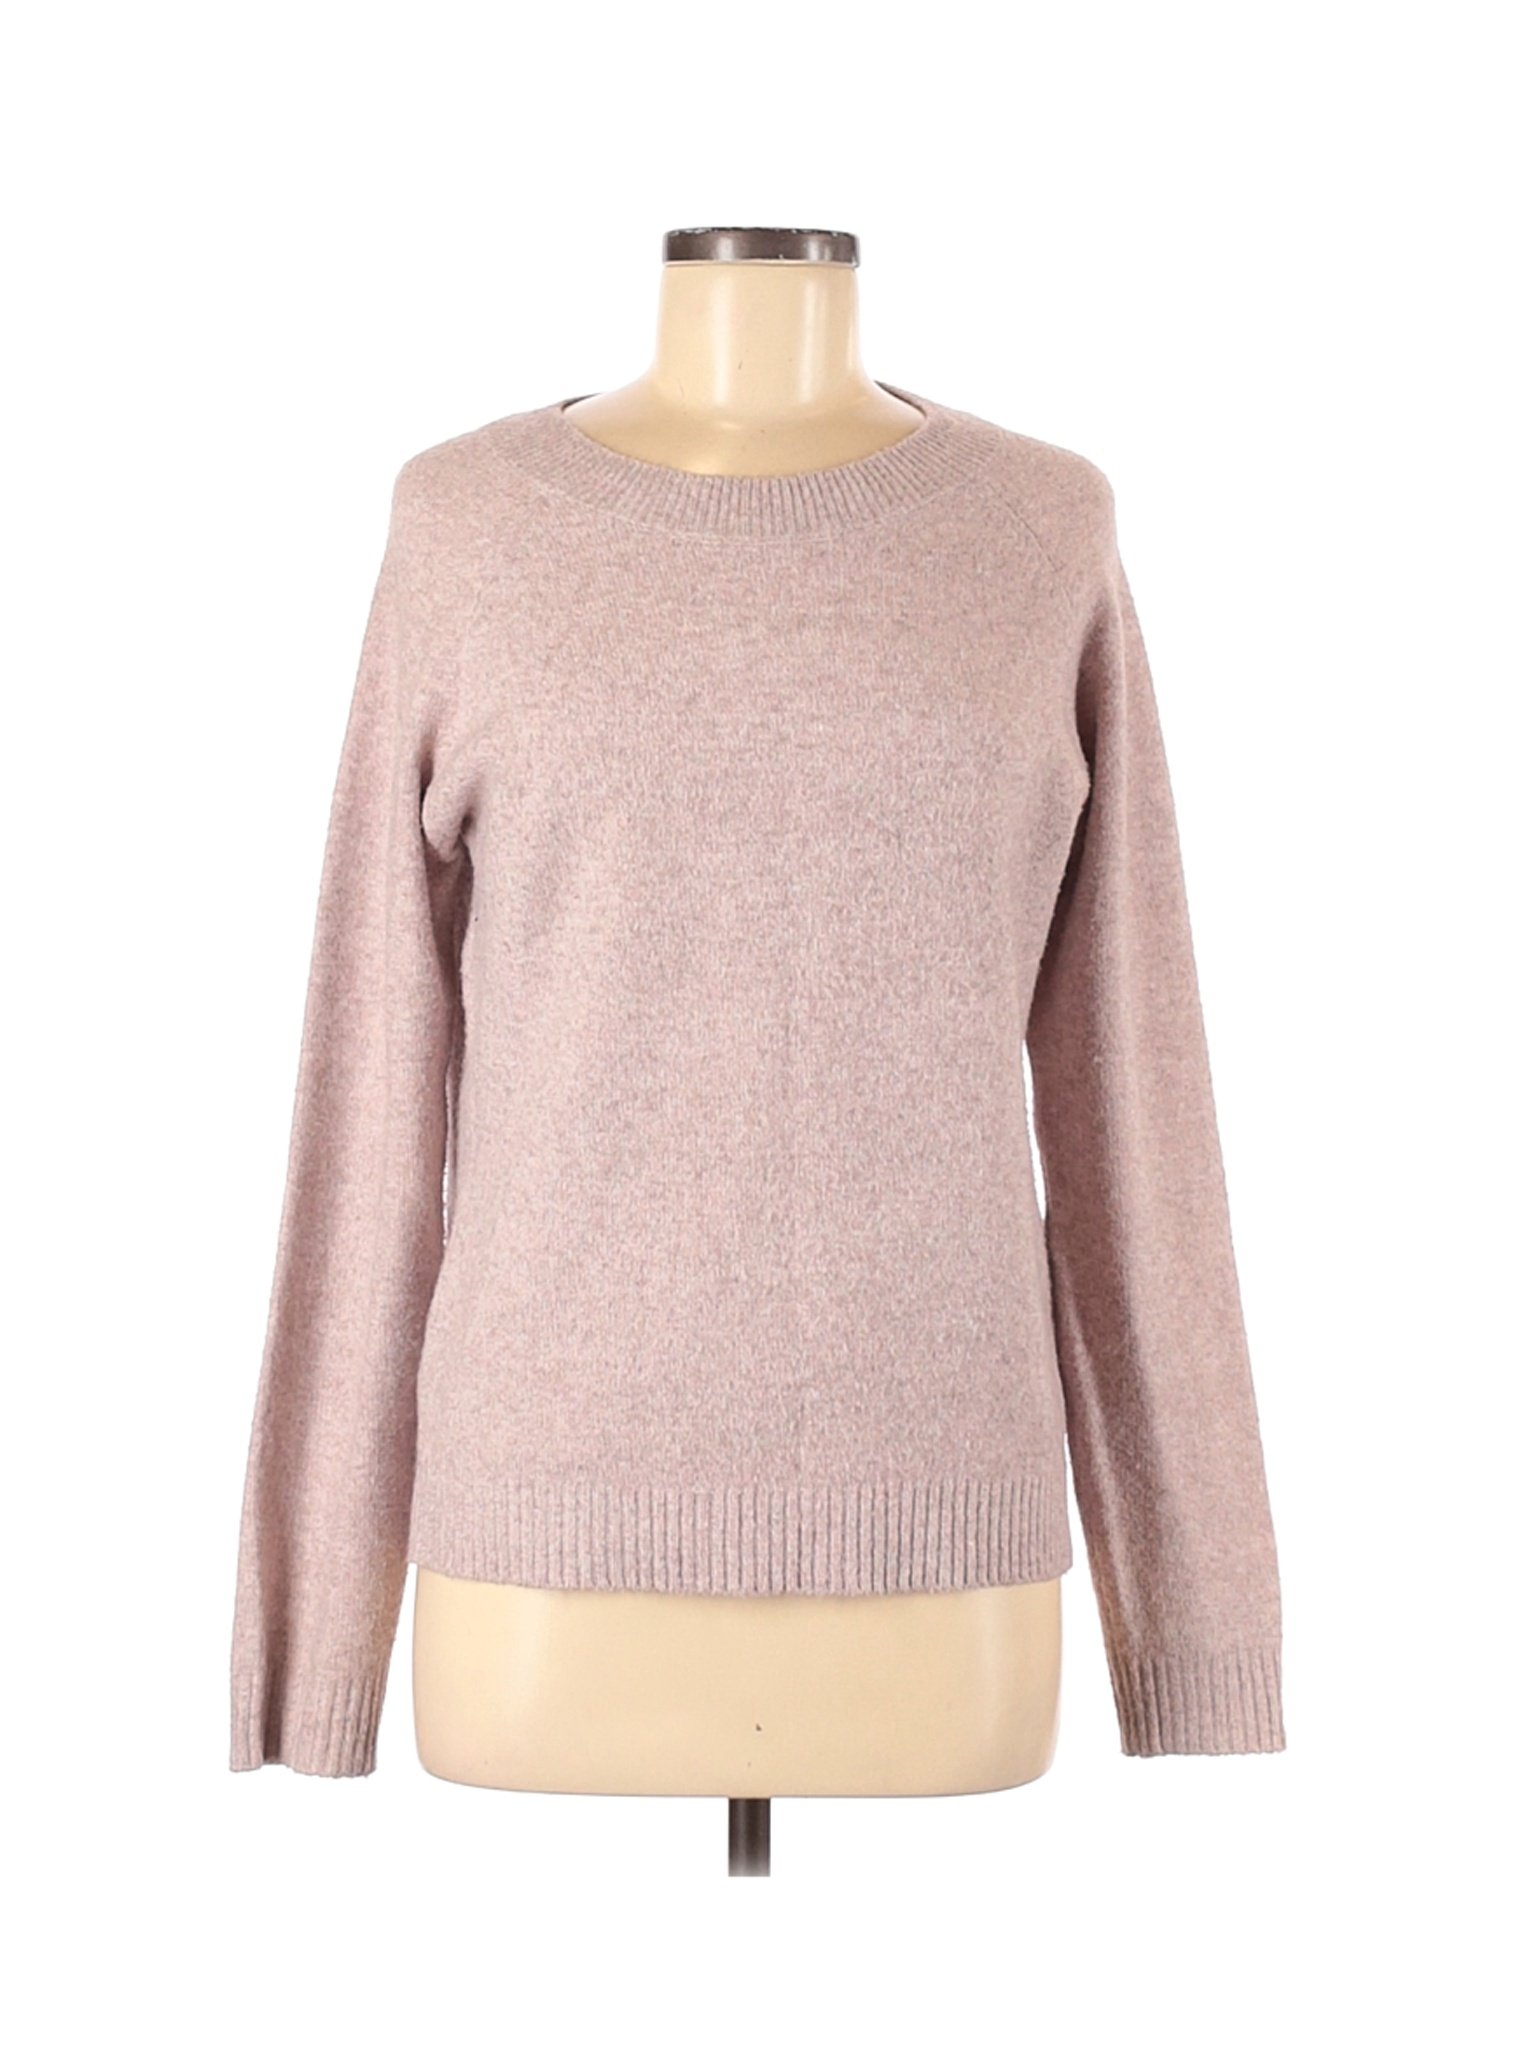 Vero Moda Women Pink Pullover Sweater S | eBay